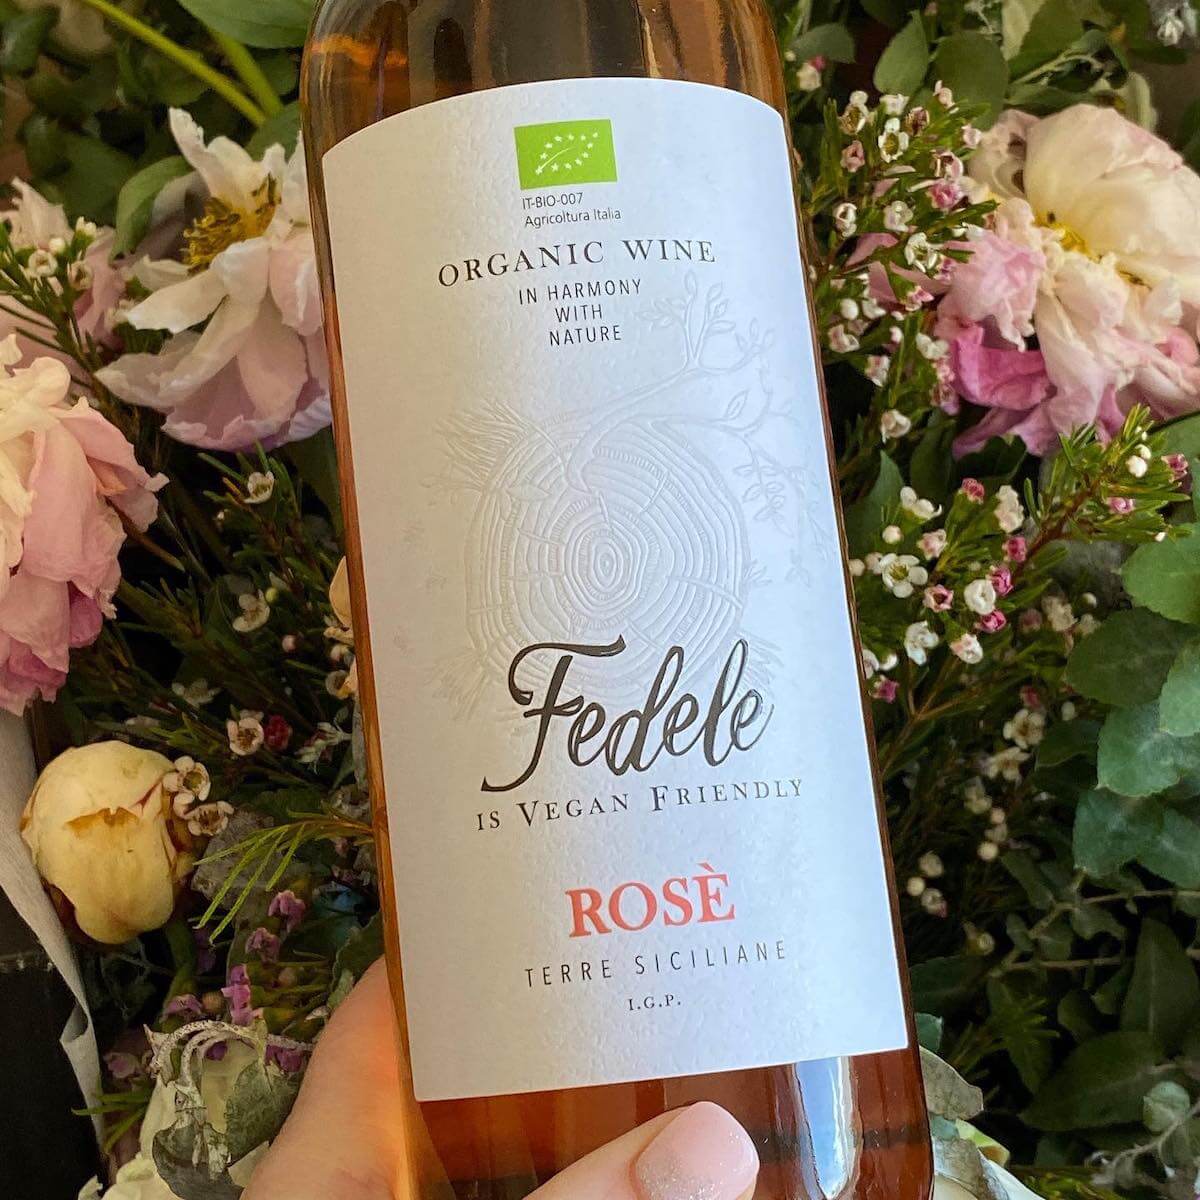 Fedele 2018 organic and vegan friendly rose